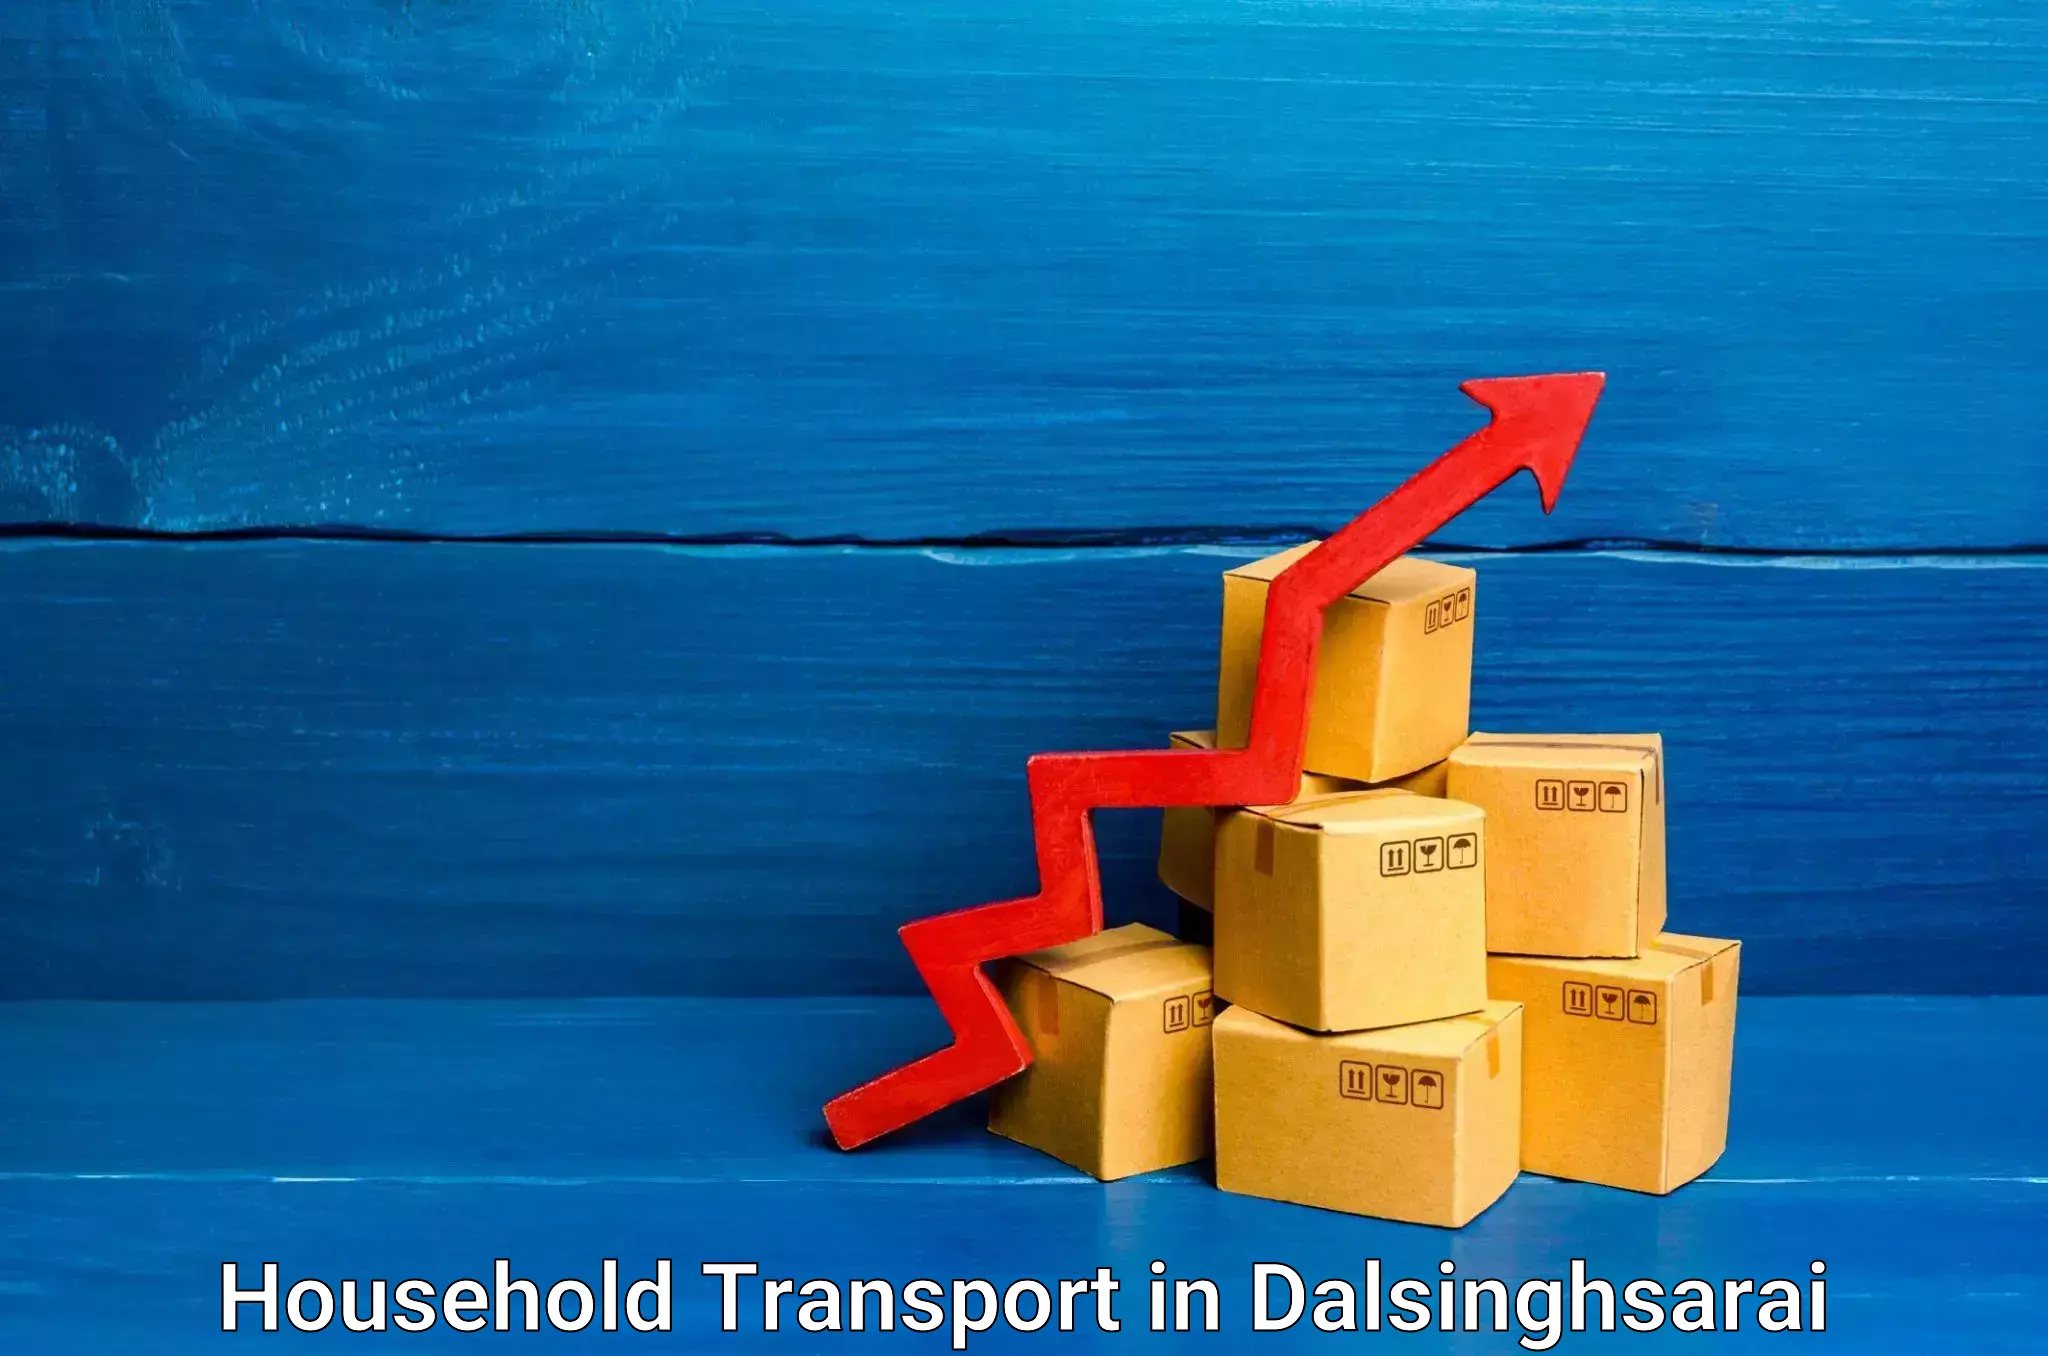 Furniture delivery service in Dalsinghsarai